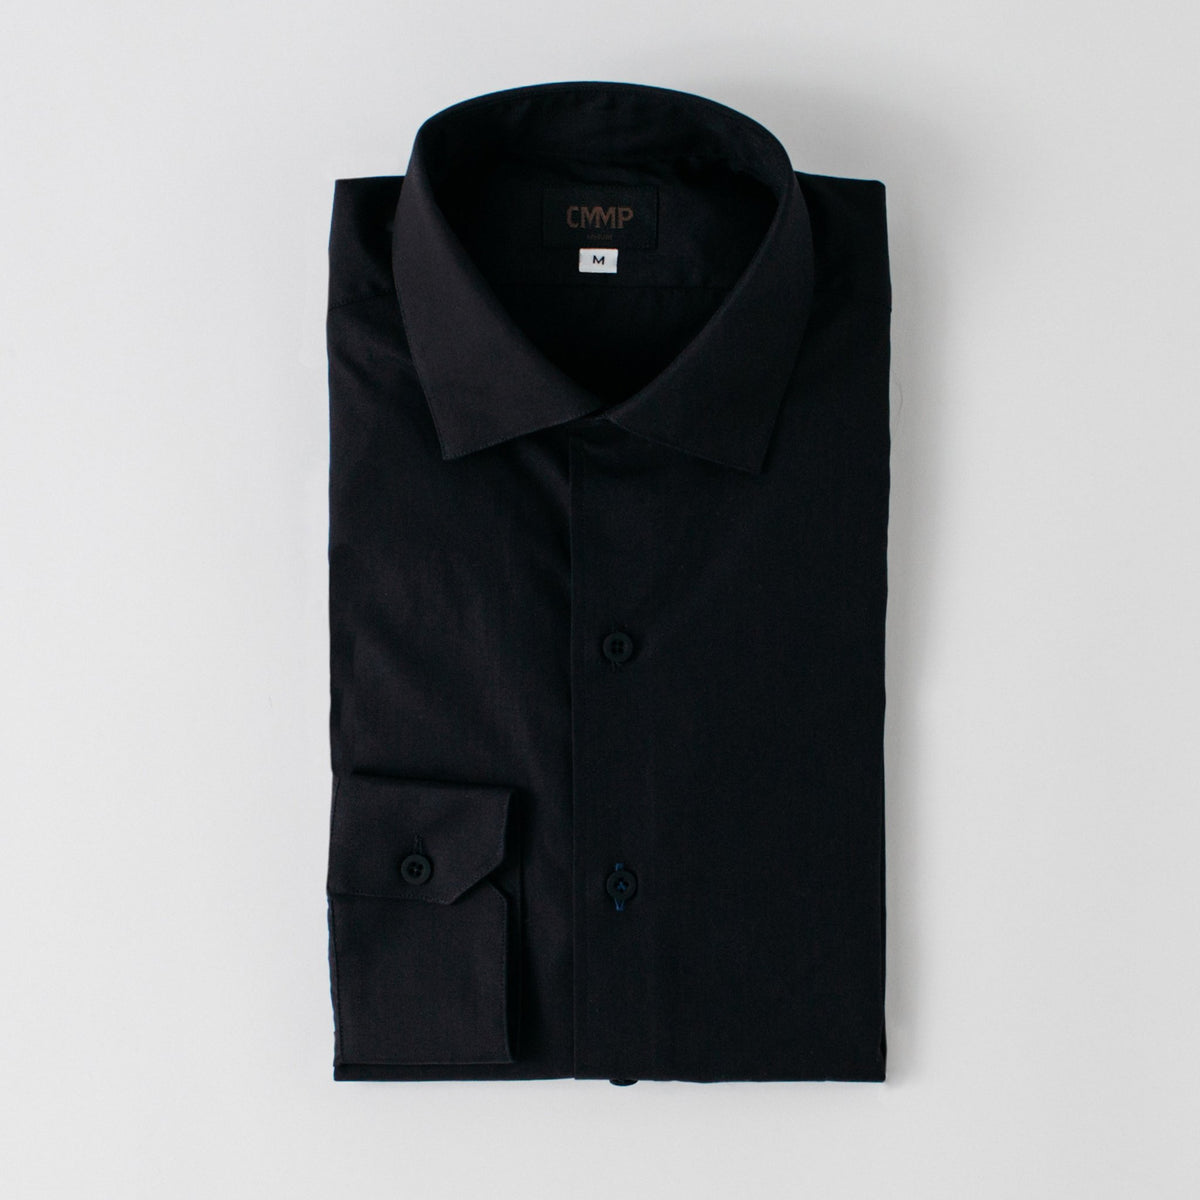 CORE // Black Shirt Shirts Commonwealth Proper